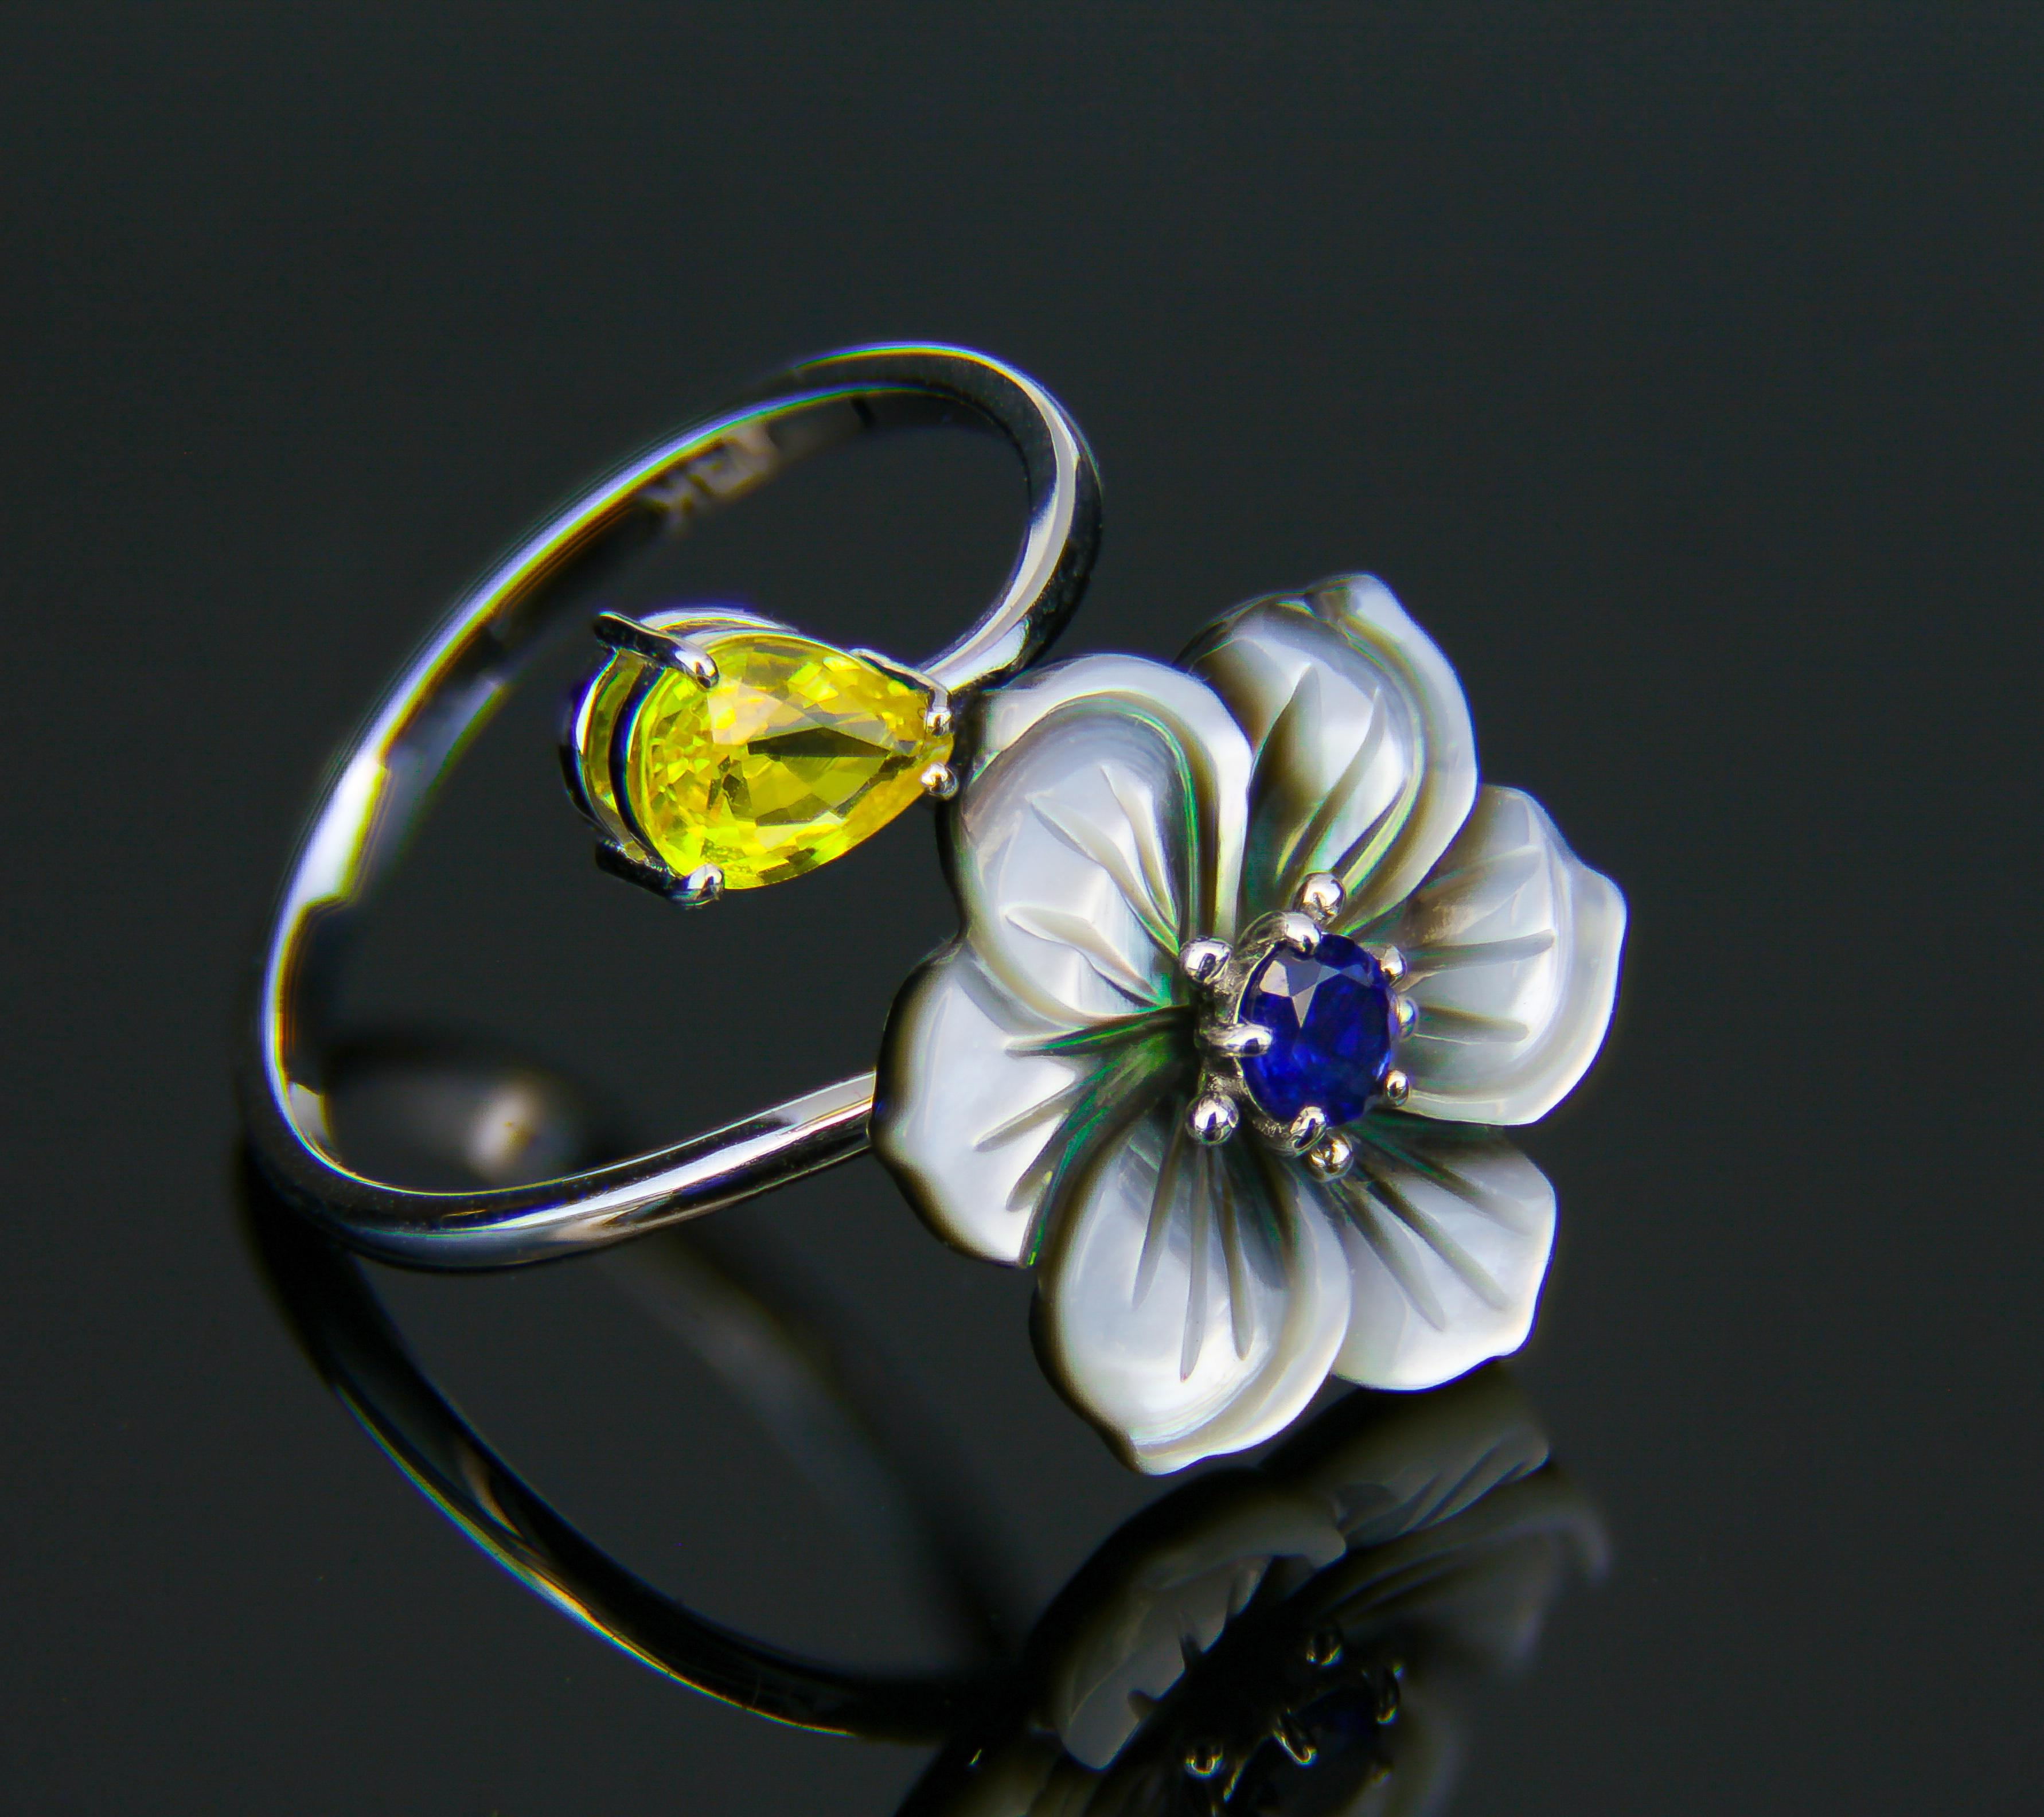 For Sale:  Carved Flower 14k ring with gemstones. 9